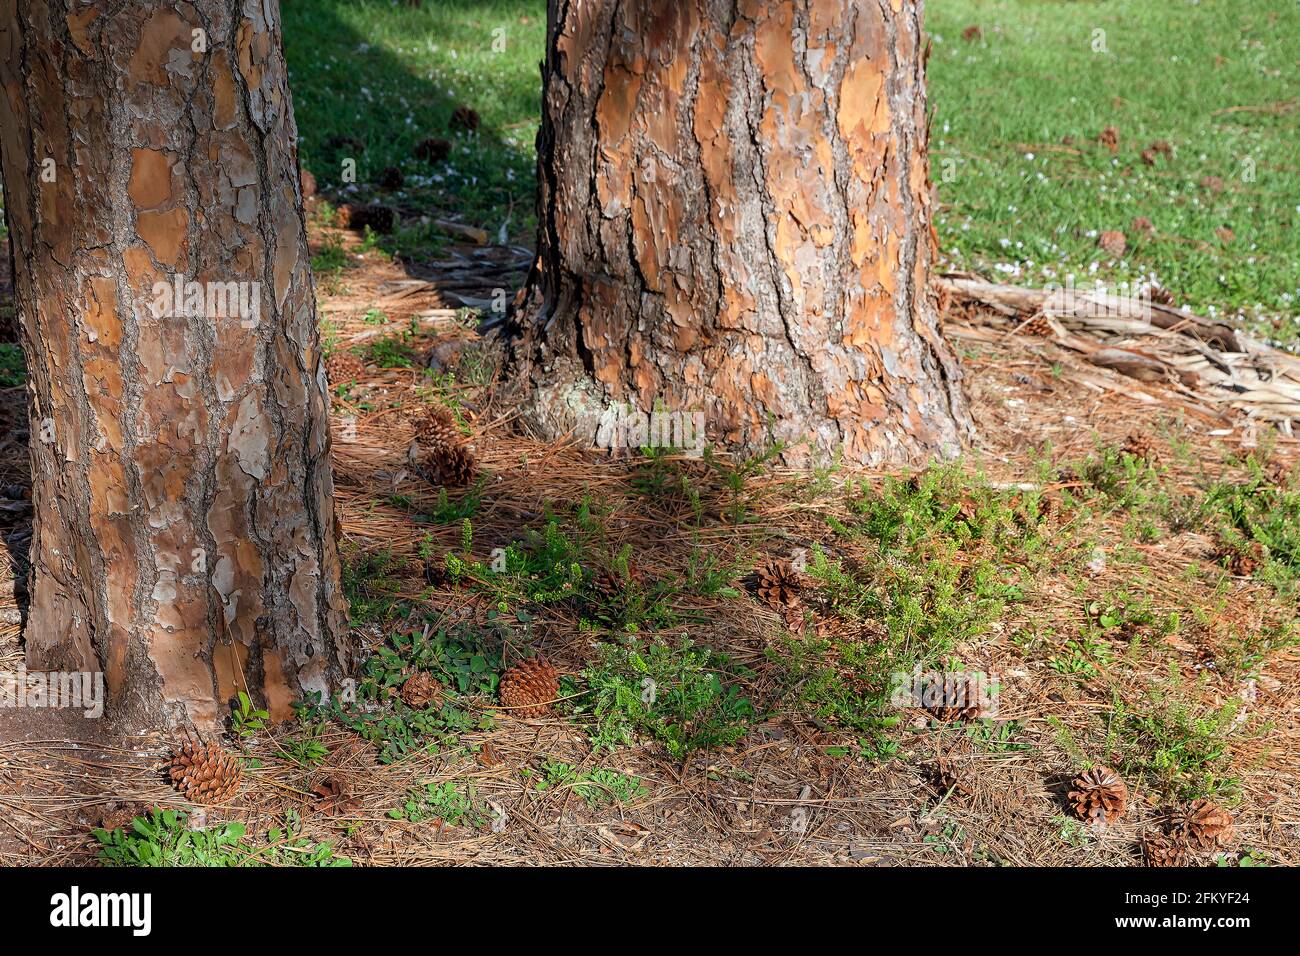 South Florida / Southern Slash Pine Tree (Pinus elliottii) ground cover. Stock Photo